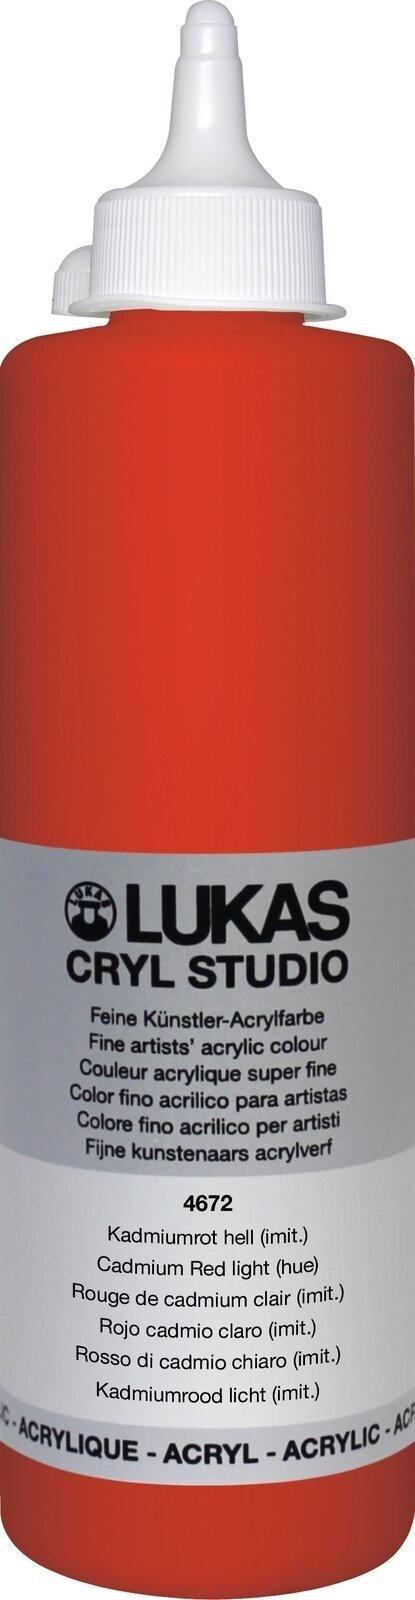 Acrylic Paint Lukas Cryl Studio Acrylic Paint Plastic Bottle Acrylic Paint Cadmium Red Light Hue 500 ml 1 pc